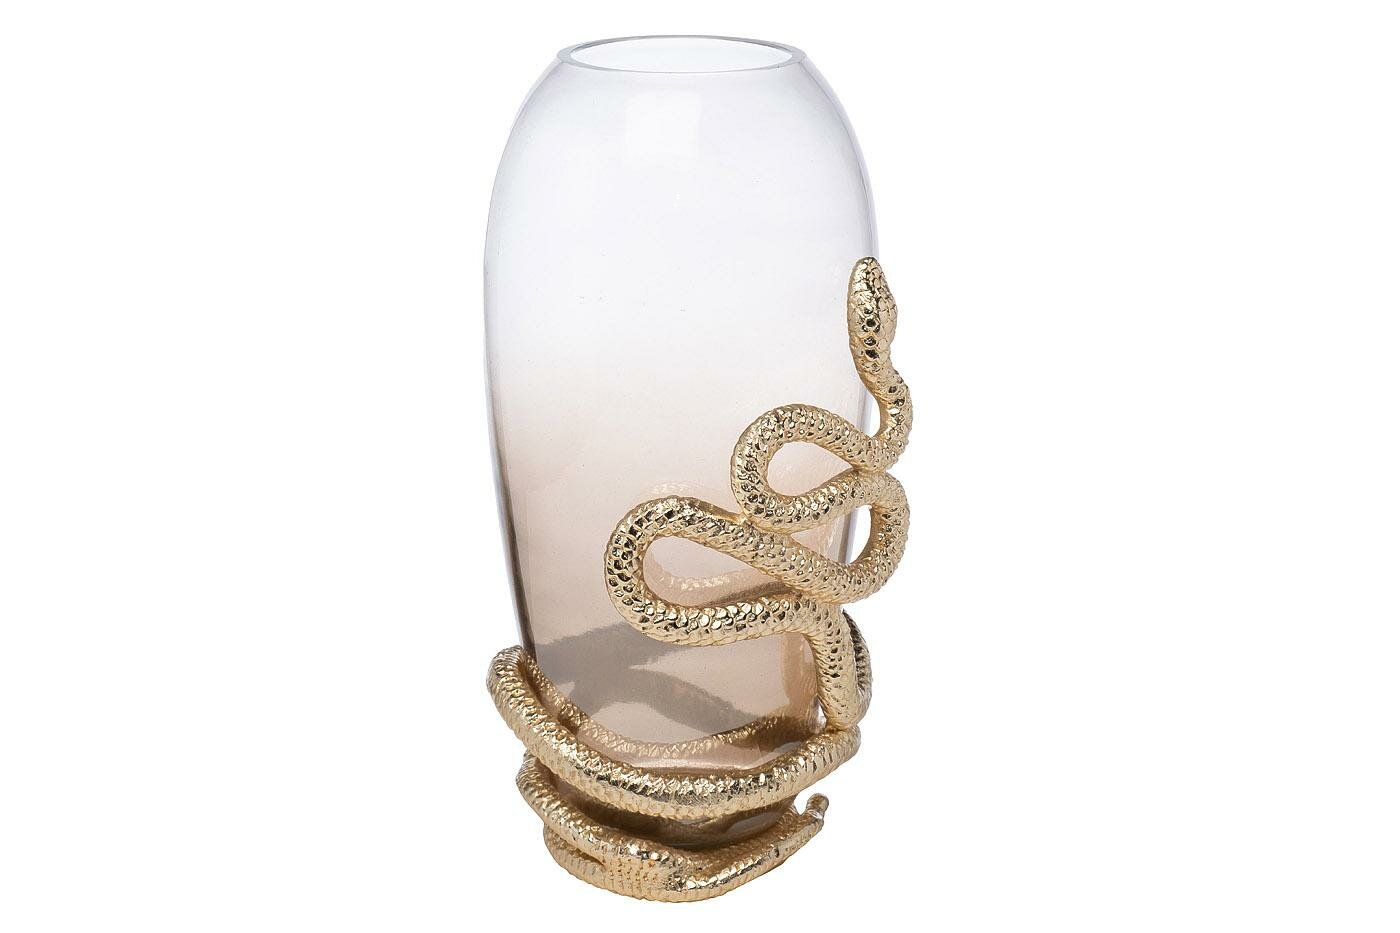 Ваза Garda Decor 69-321001 Ваза декорат. "Serpente" стекл. дымчато-молочного цвета 18*16*32,5 см арт. 69-321001